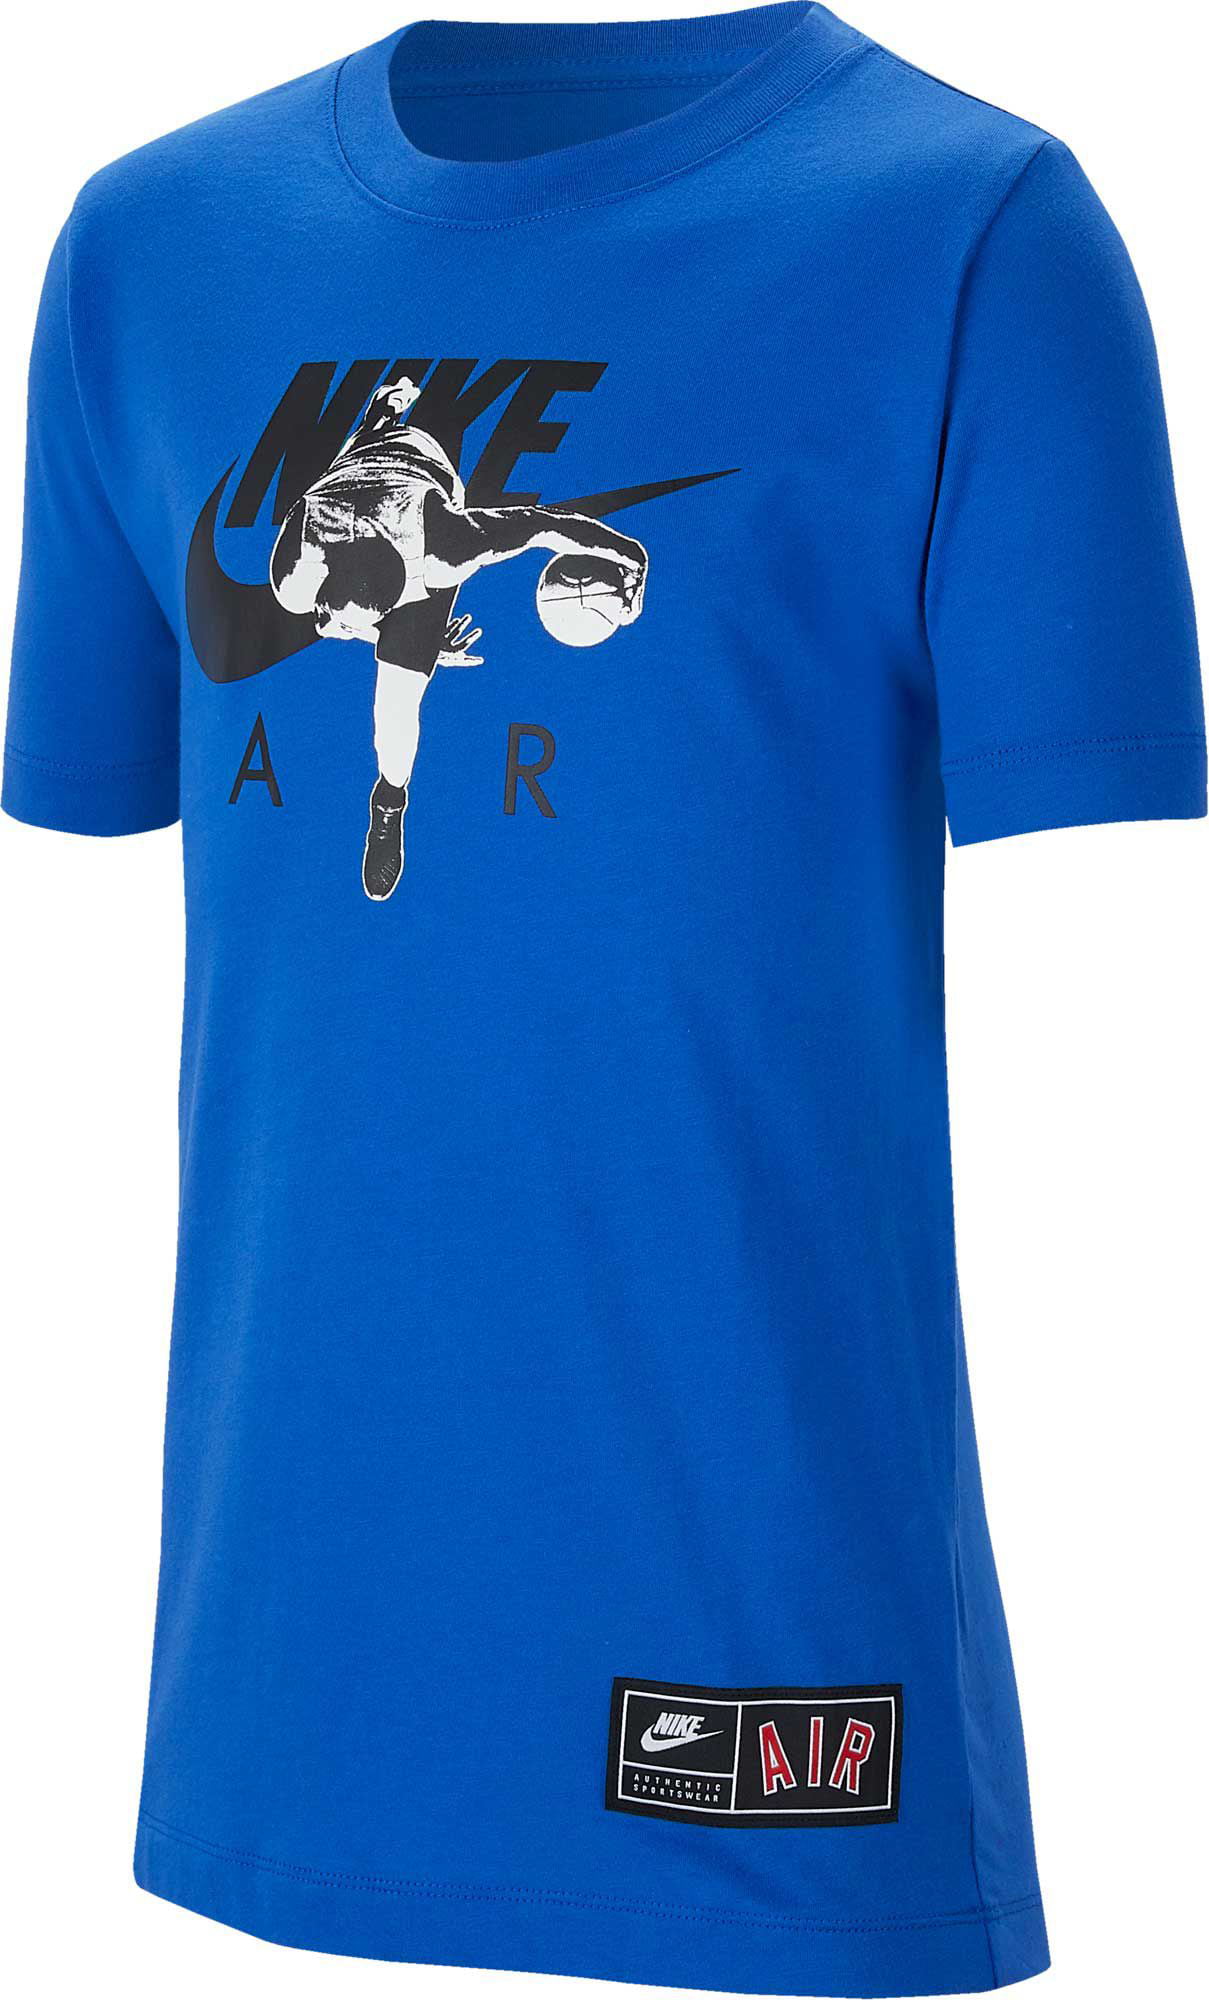 Nike Boys' Sportswear Air Photo Real Graphic T-Shirt - Walmart.com ...